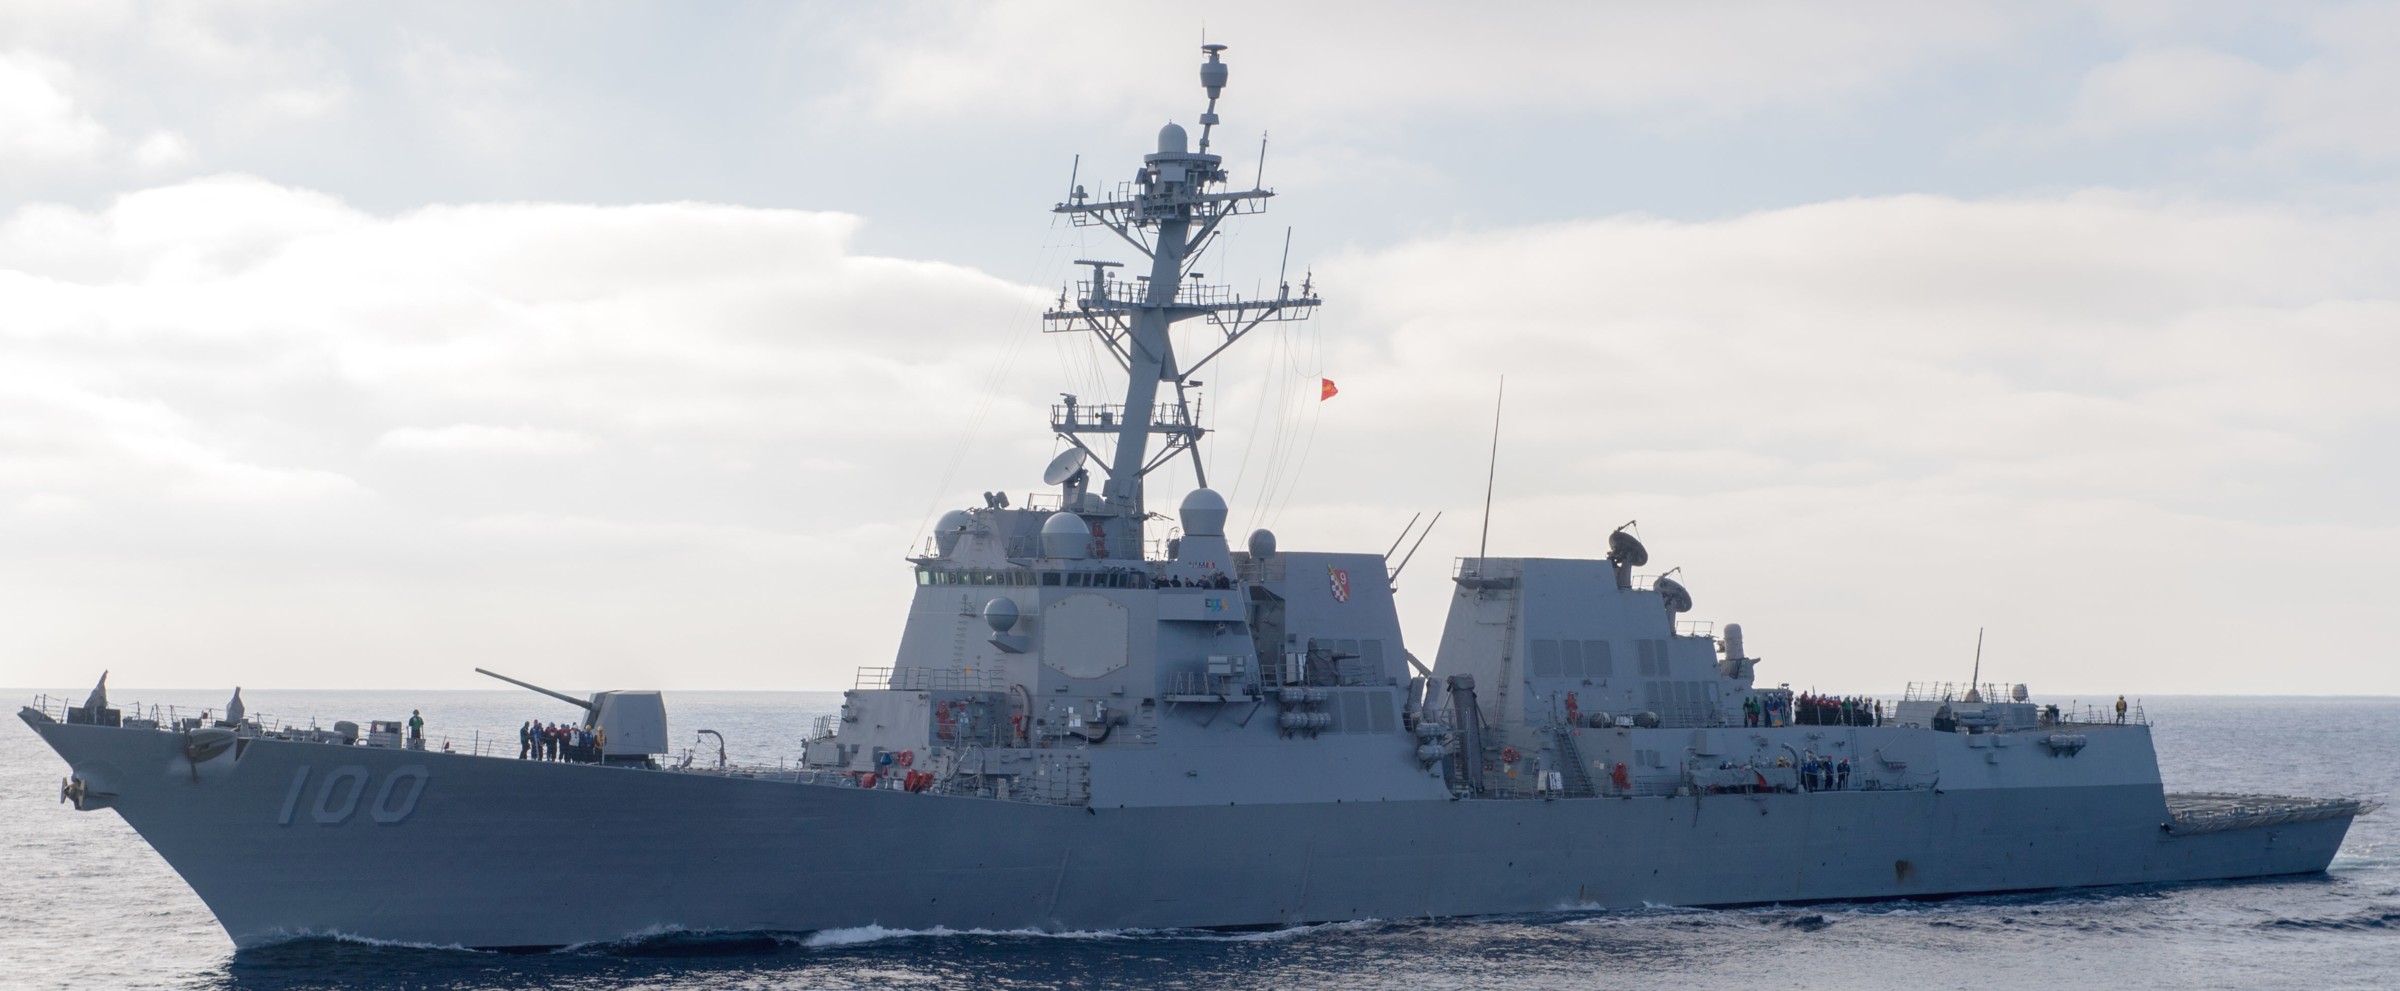 ddg-100 uss kidd arleigh burke class guided missile destroyer aegis us navy pacific ocean 33